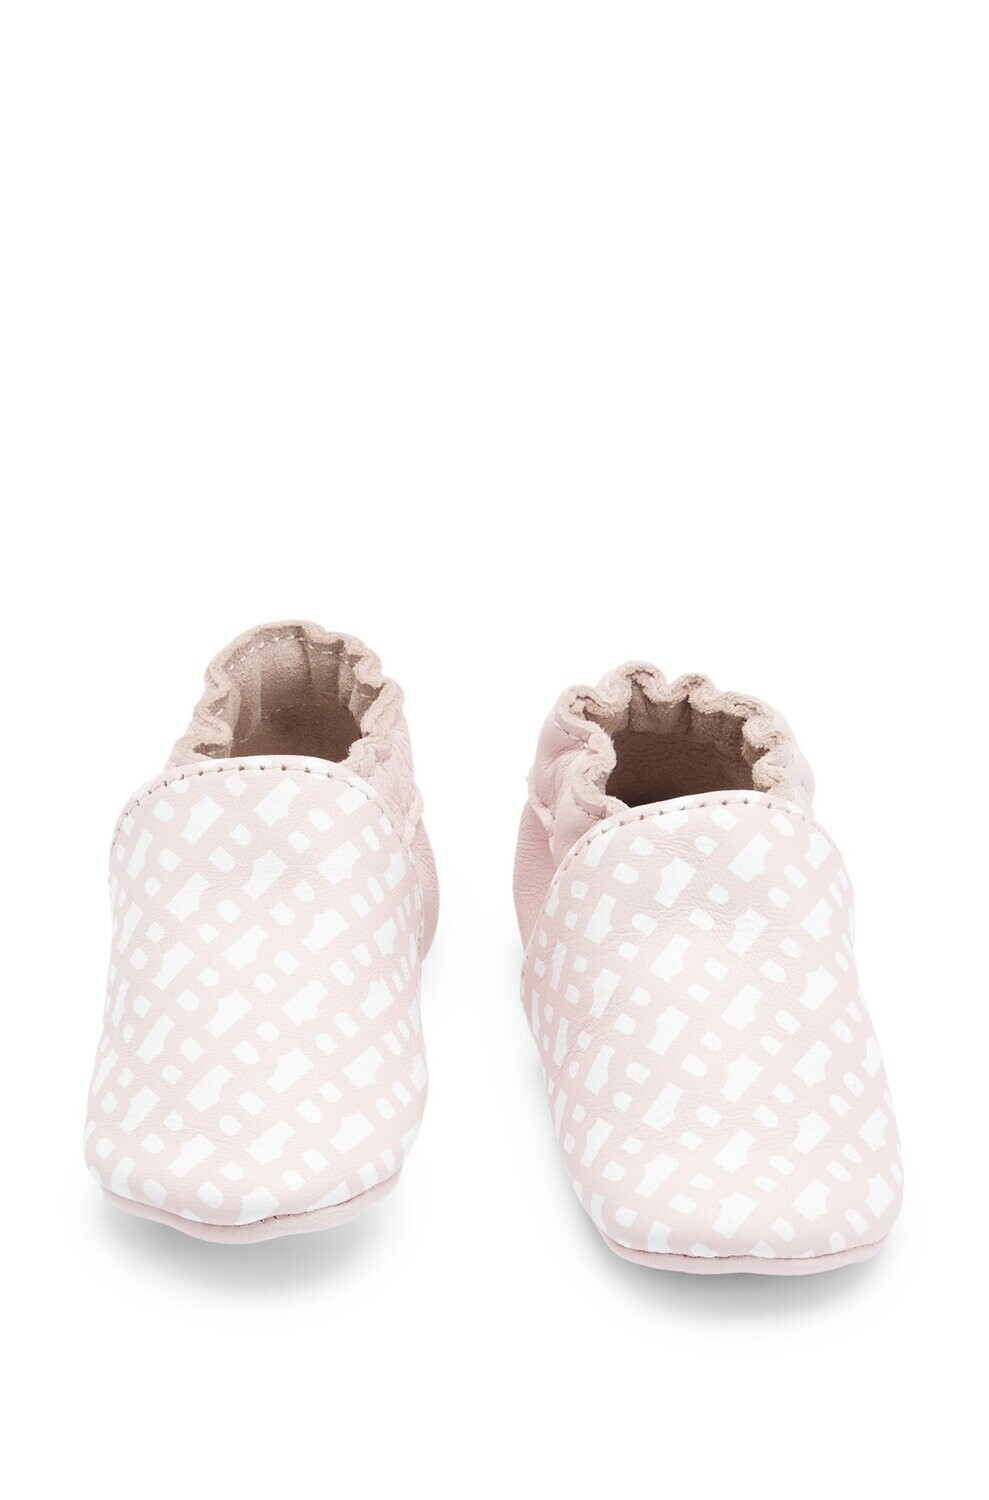 Hugo Boss J99123 Baby Girl's Slip-On Shoes/, Color: PALE PINK, Size: 17